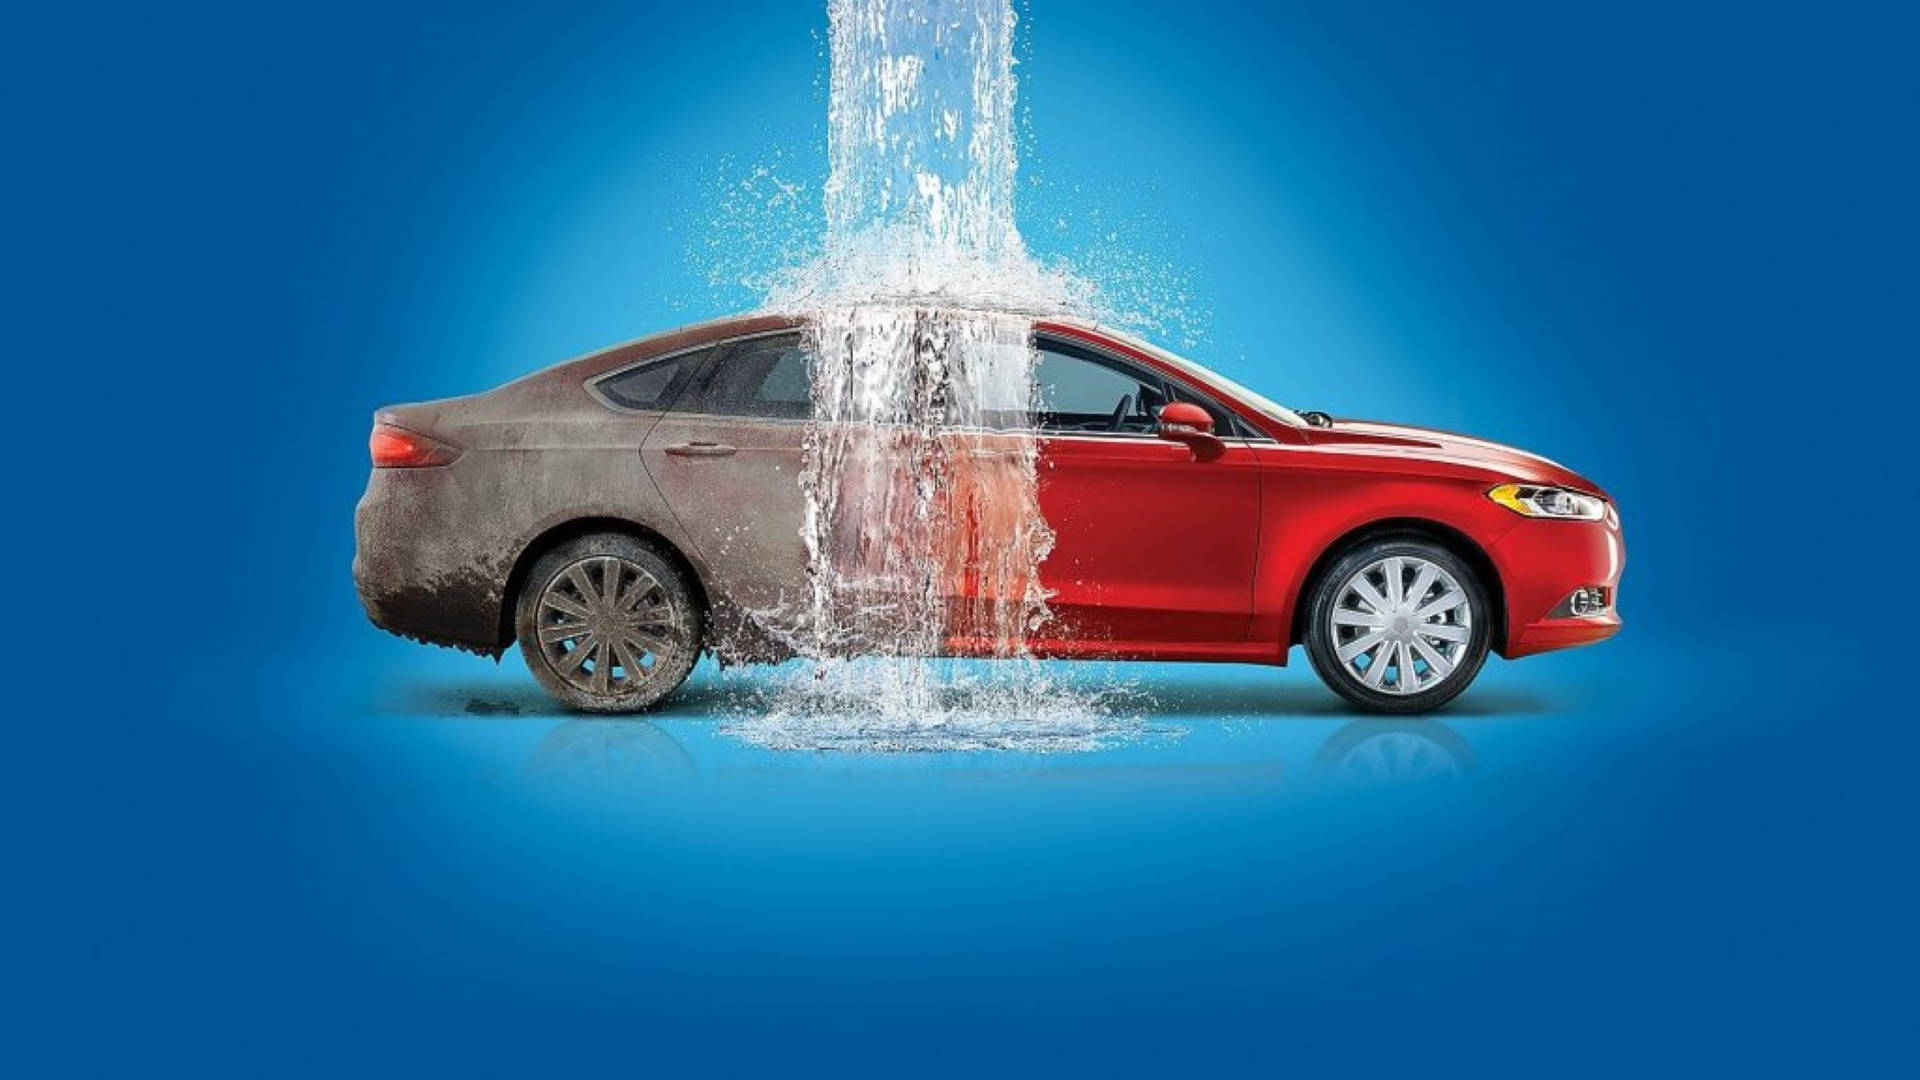 Car Wash Wallpaper Images